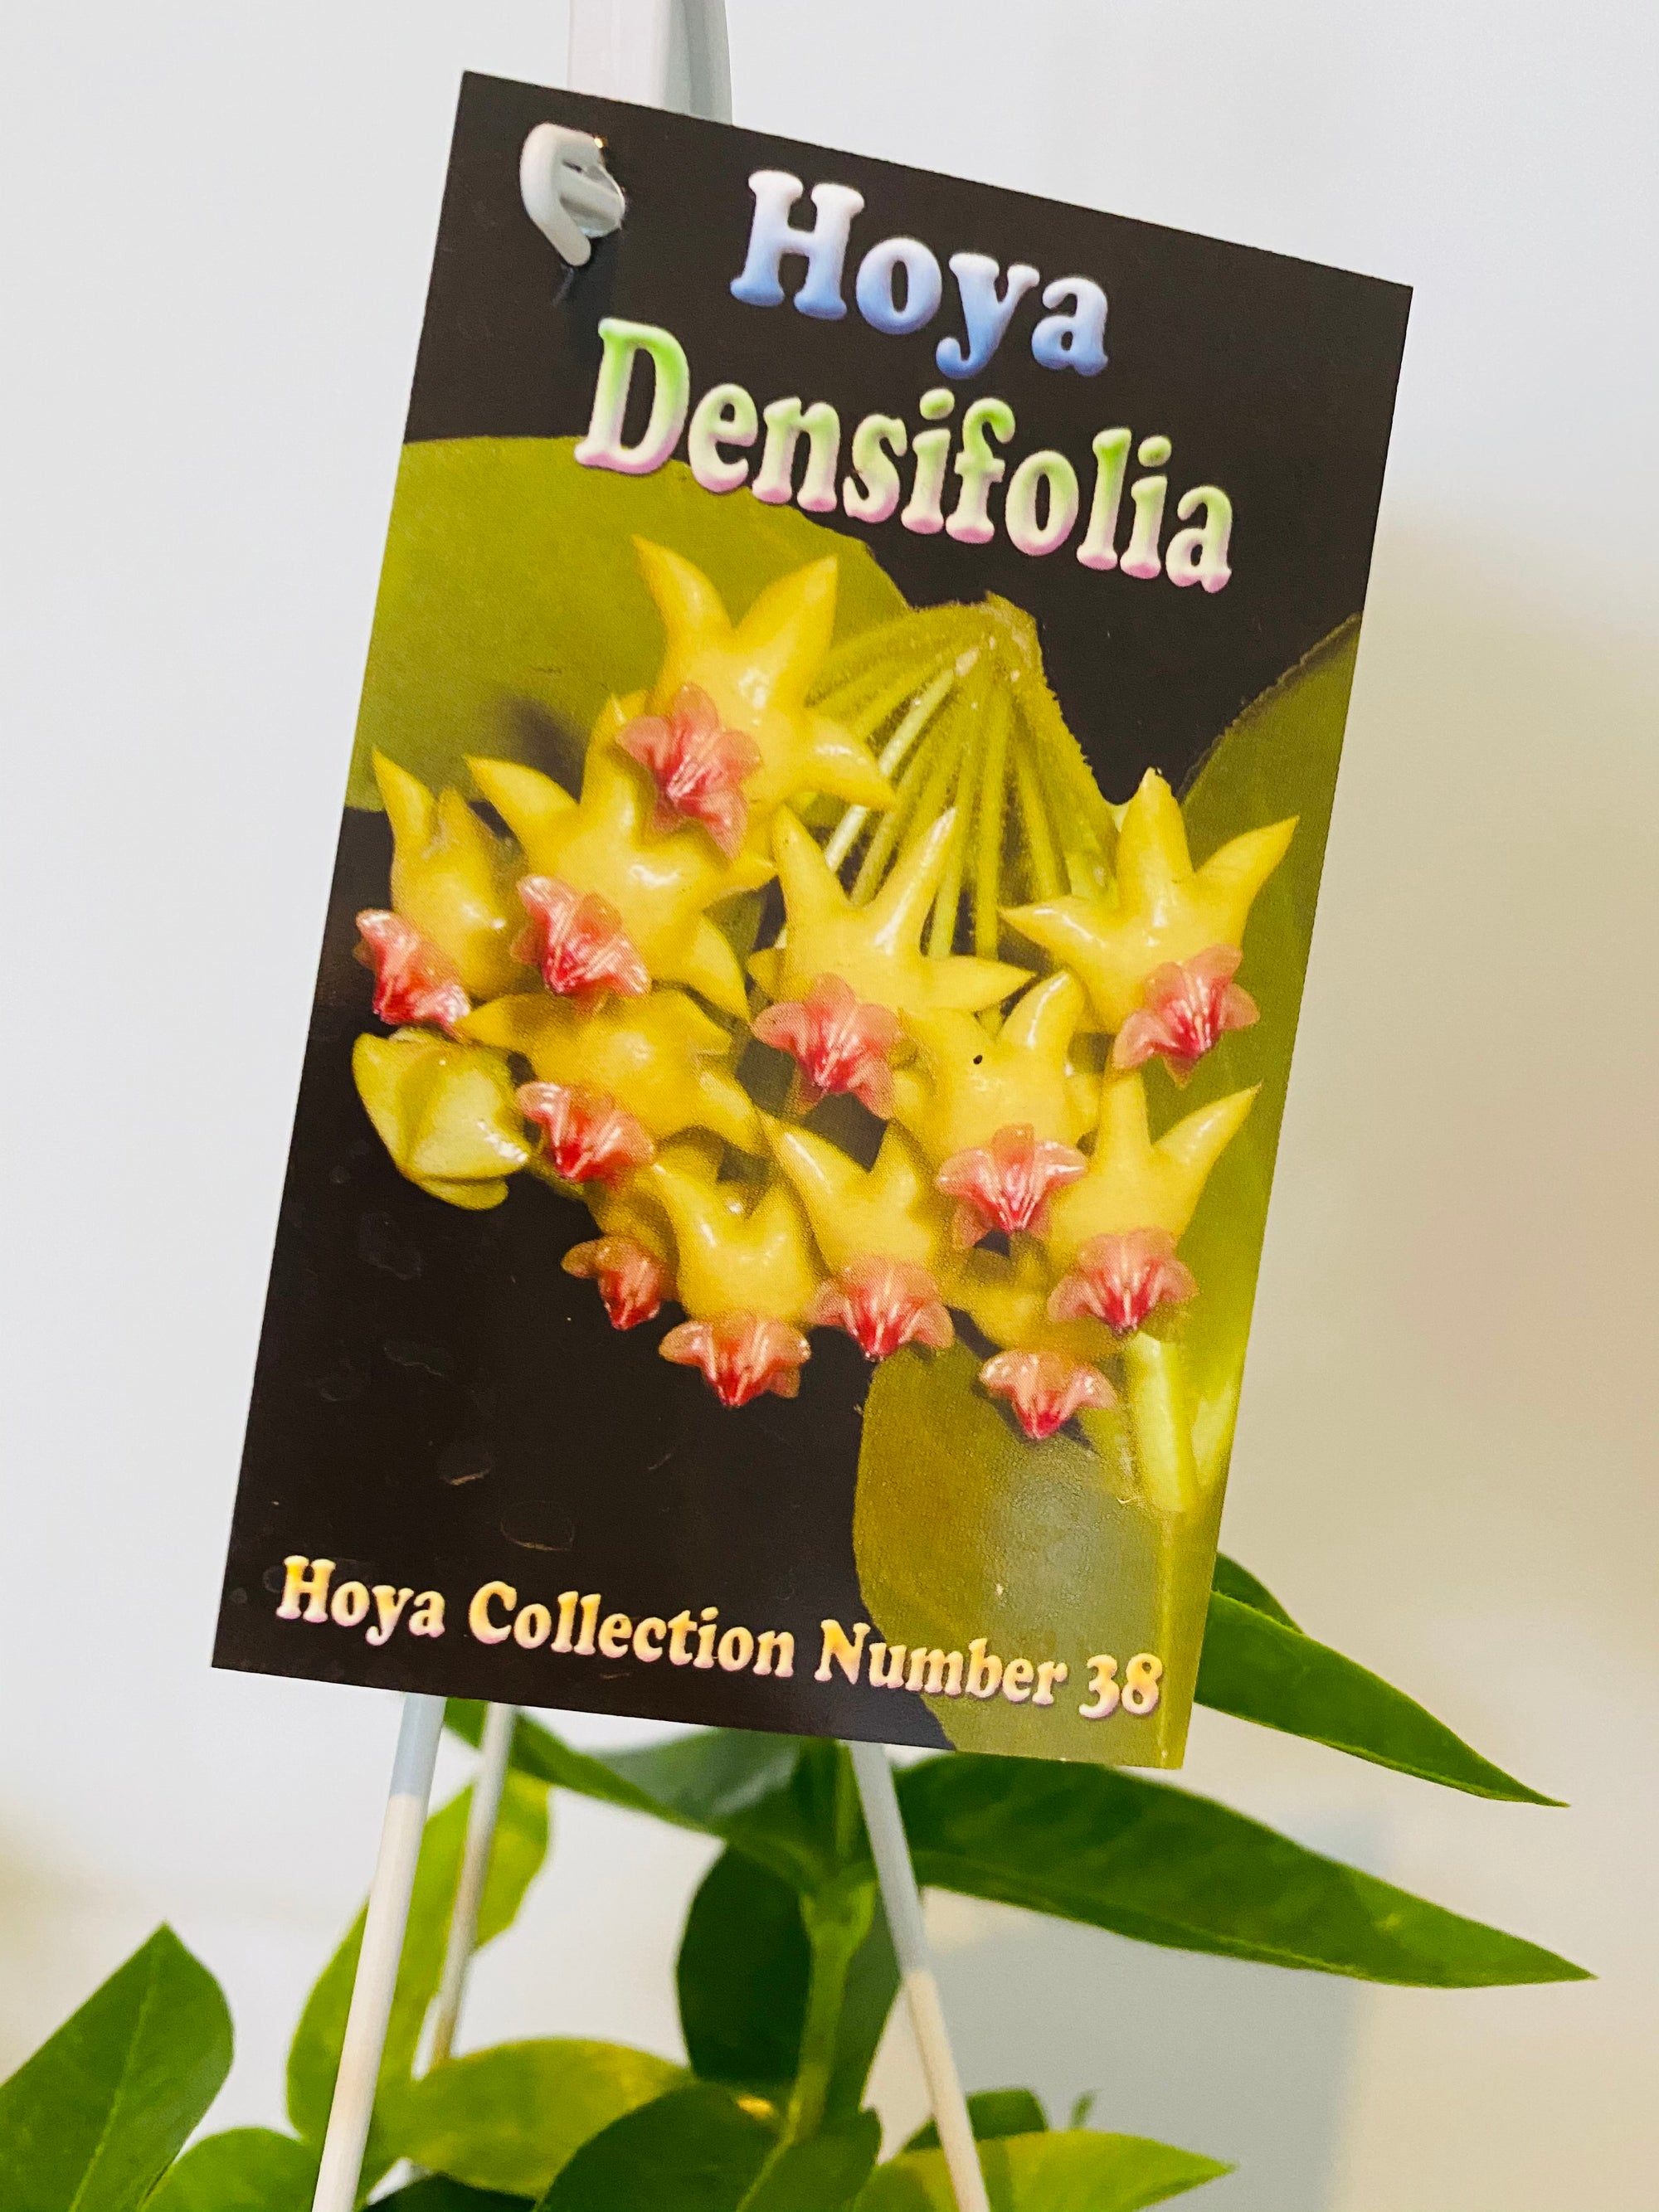 Hoya - Densifolia Collection No. 38